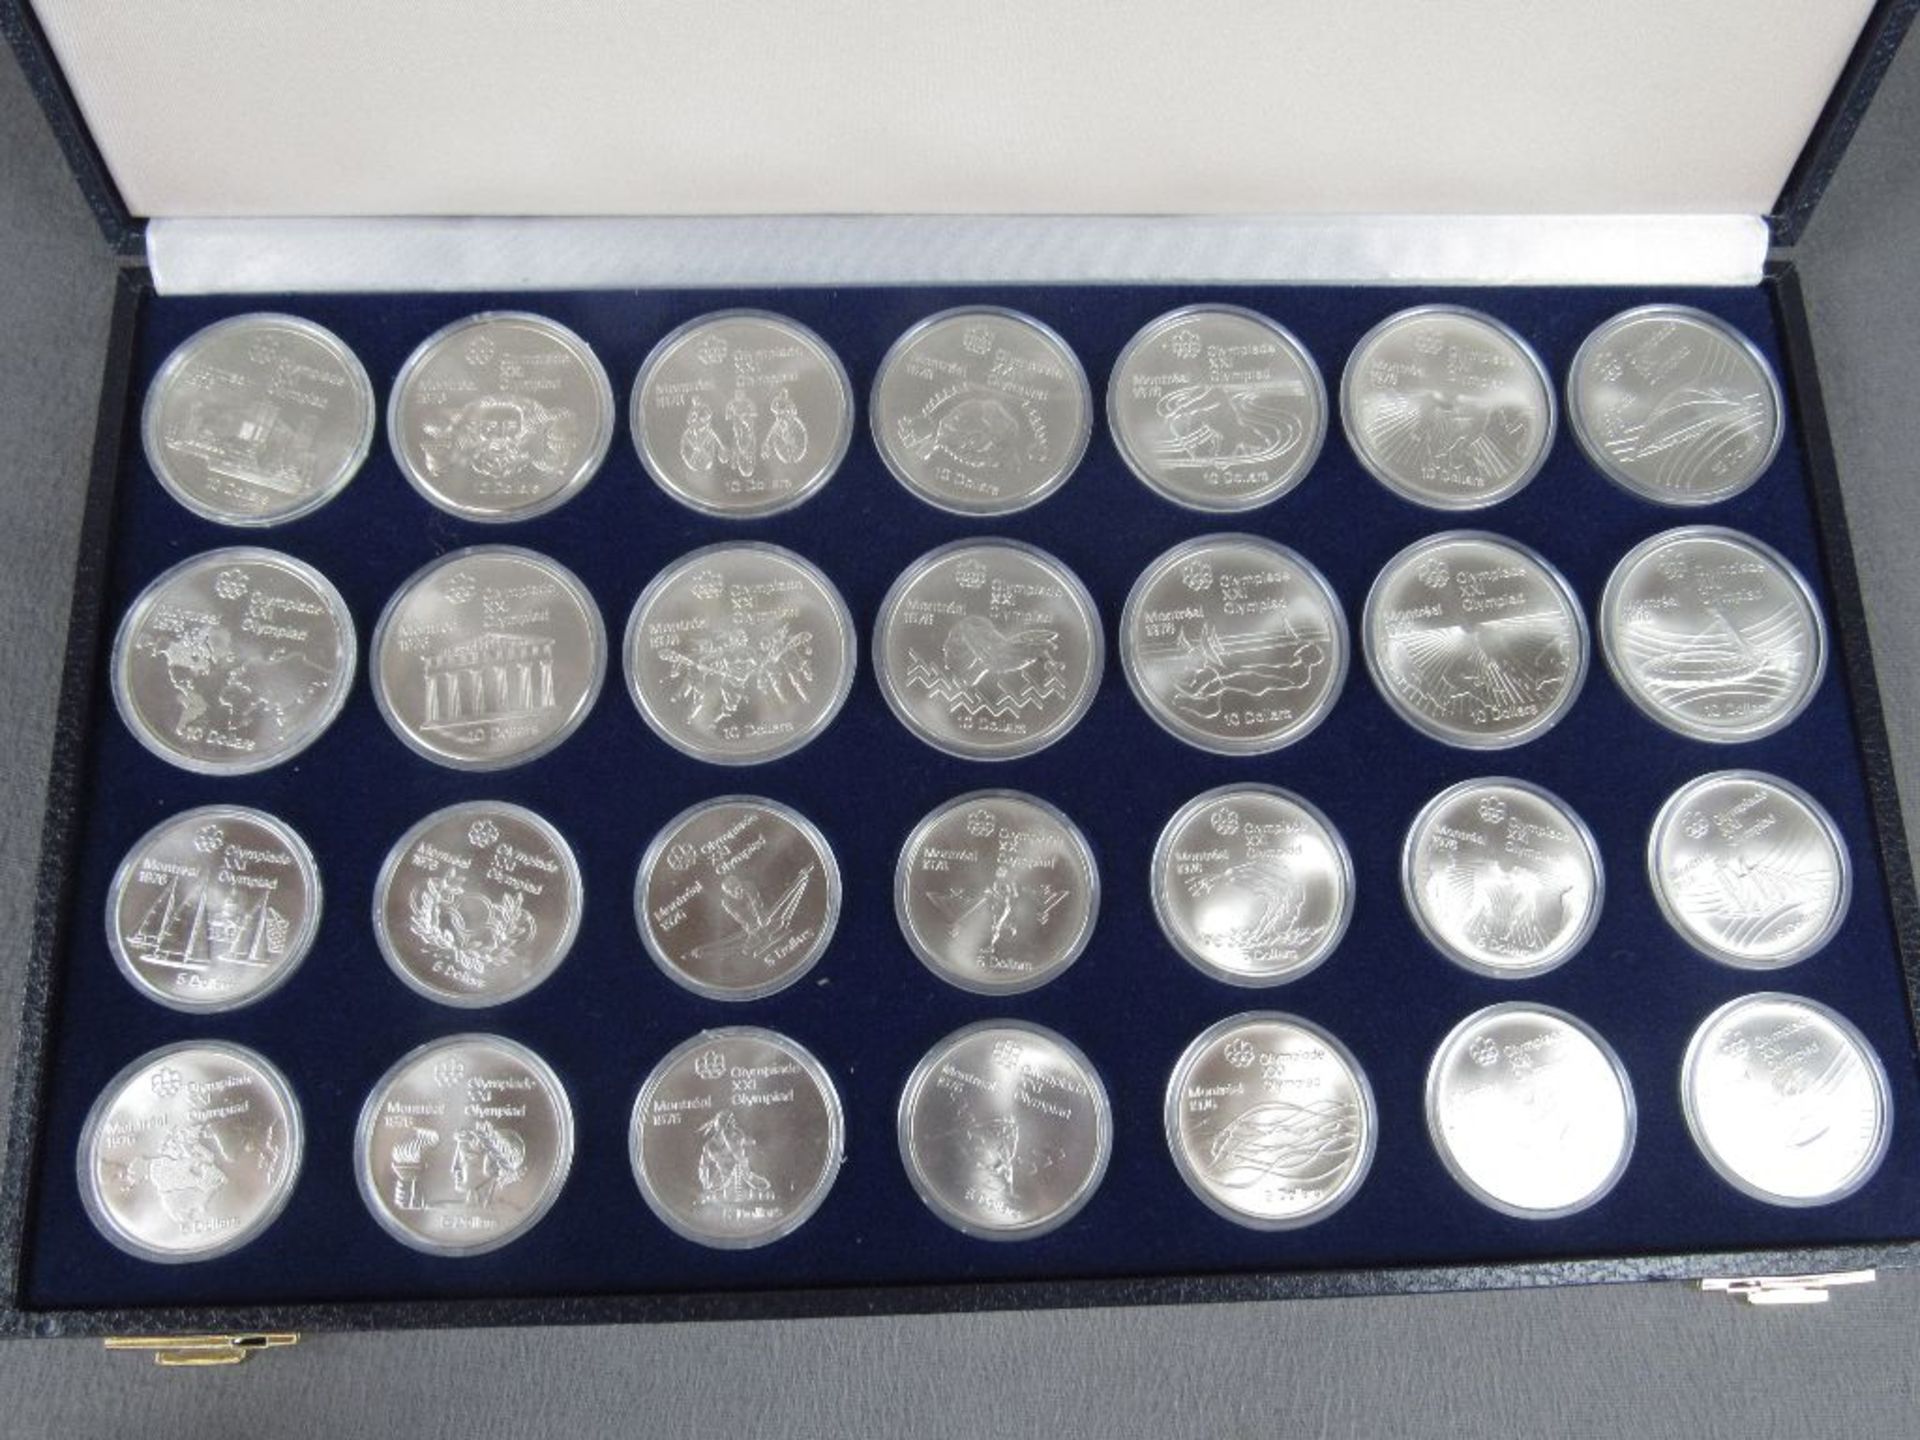 Canada Silbermünzen Olympia 1976 komplett - Bild 3 aus 5